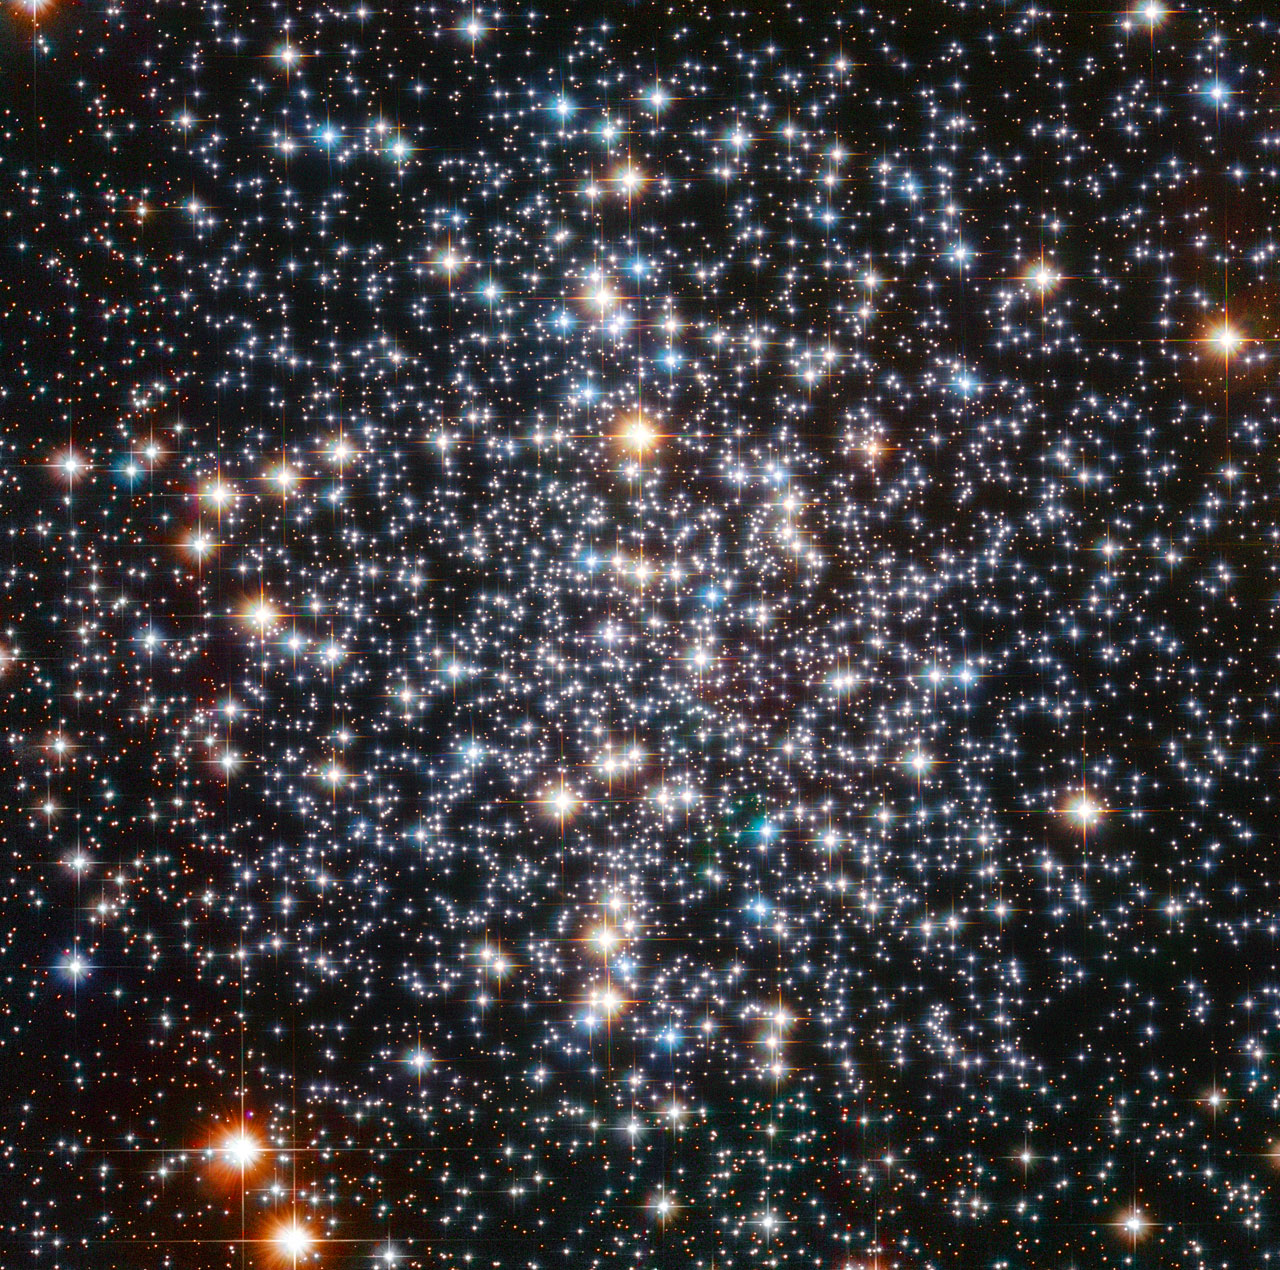 http://1.bp.blogspot.com/-6CKc2gkh3nA/UEdWPWeBdzI/AAAAAAAAI70/KiCKSajRzuw/s1600/NASA-ESA+Hubble+Space+Telescope+image+of+the+centre+of+Messier+4.jpg